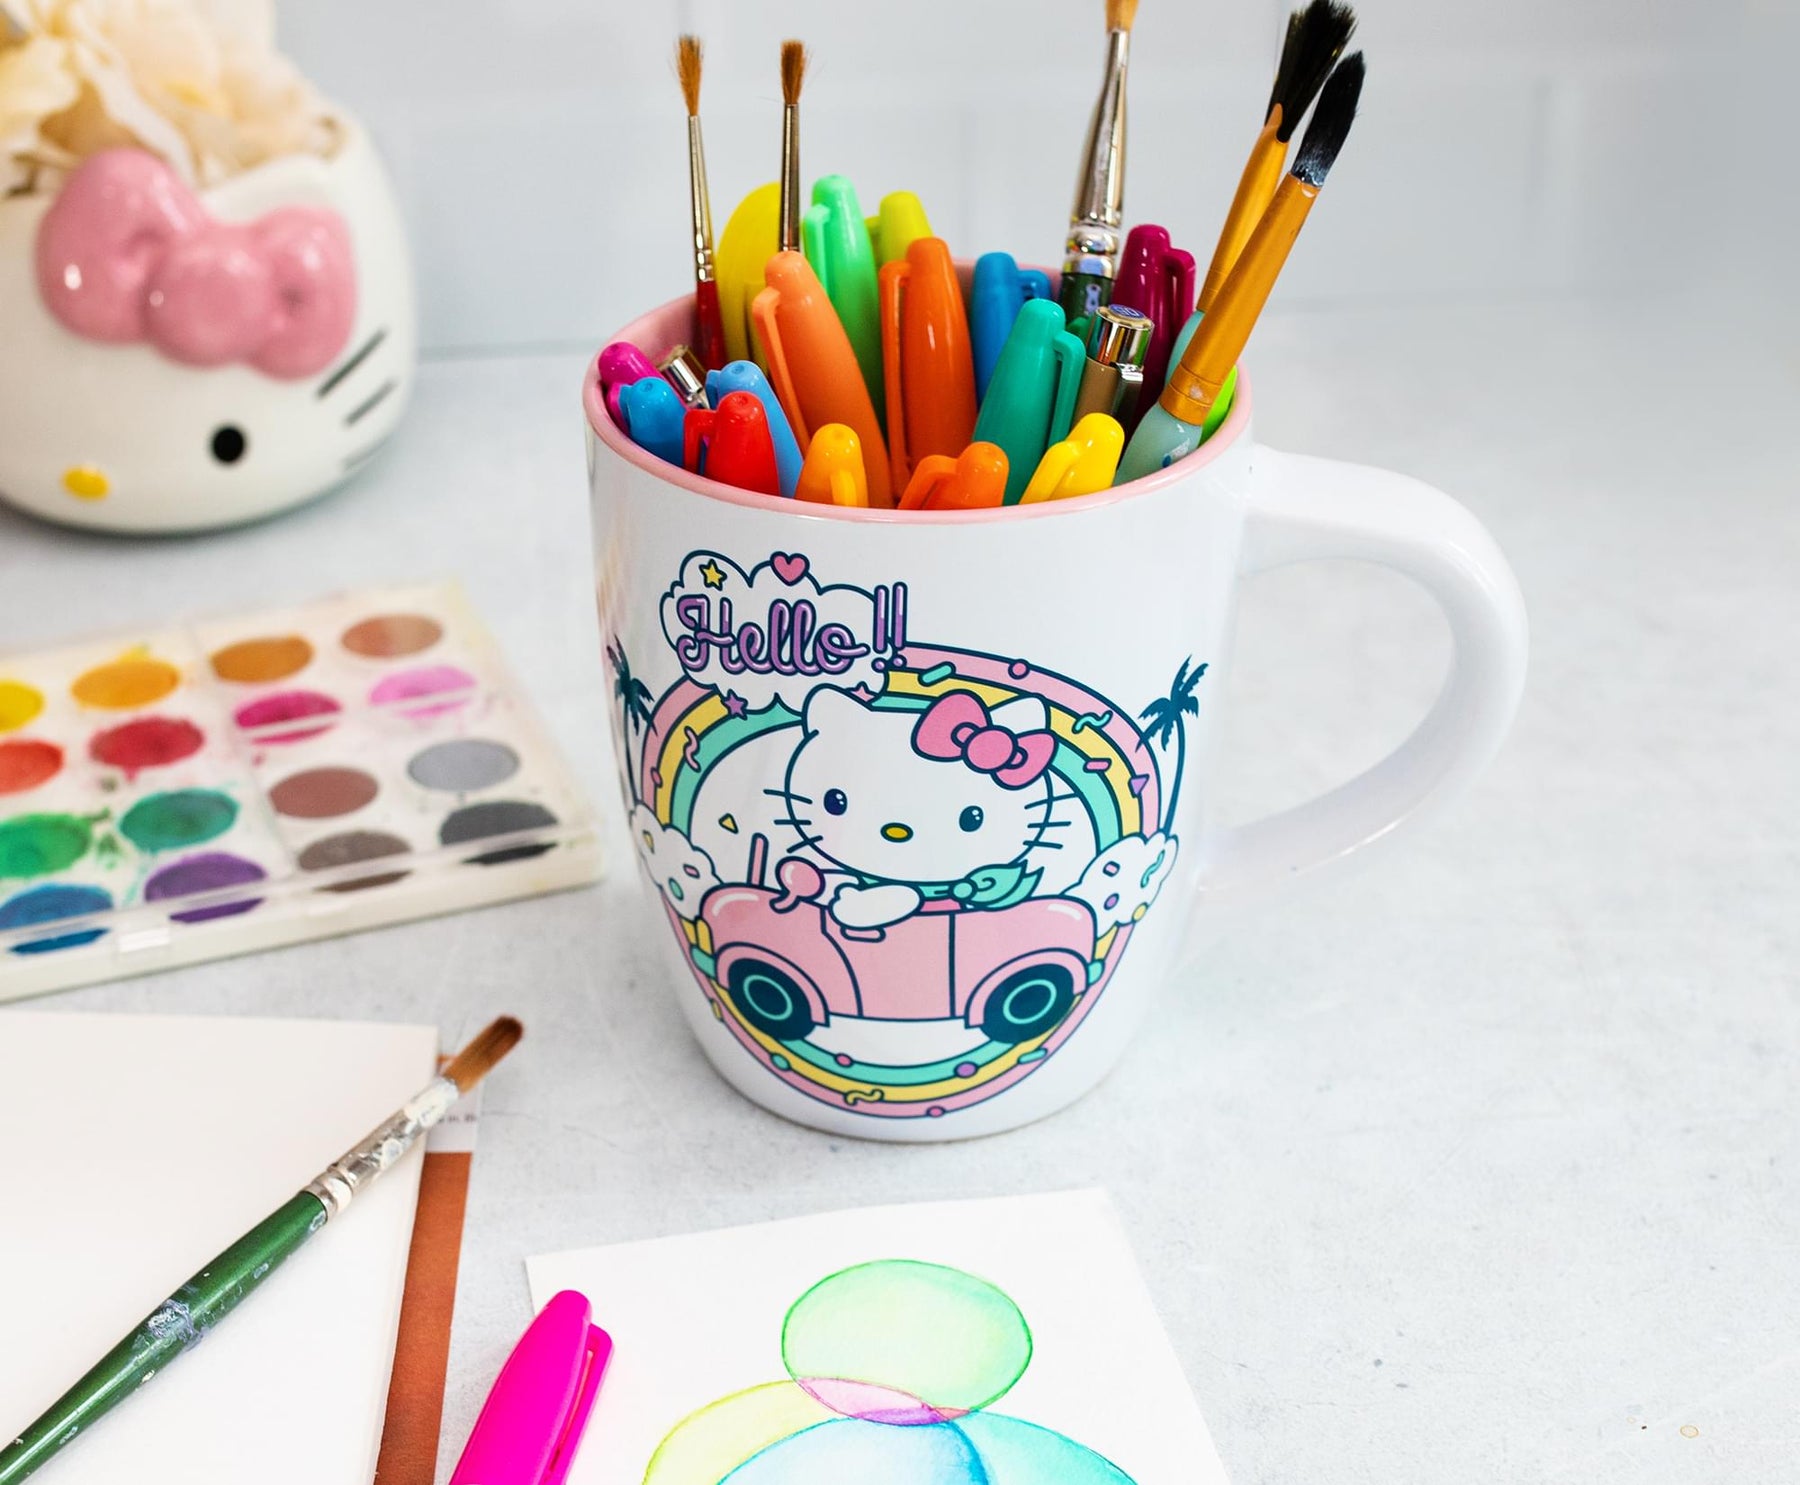 Sanrio Hello Kitty Rainbow Car Jumbo Curved Ceramic Latte Mug | Holds 25 Ounces